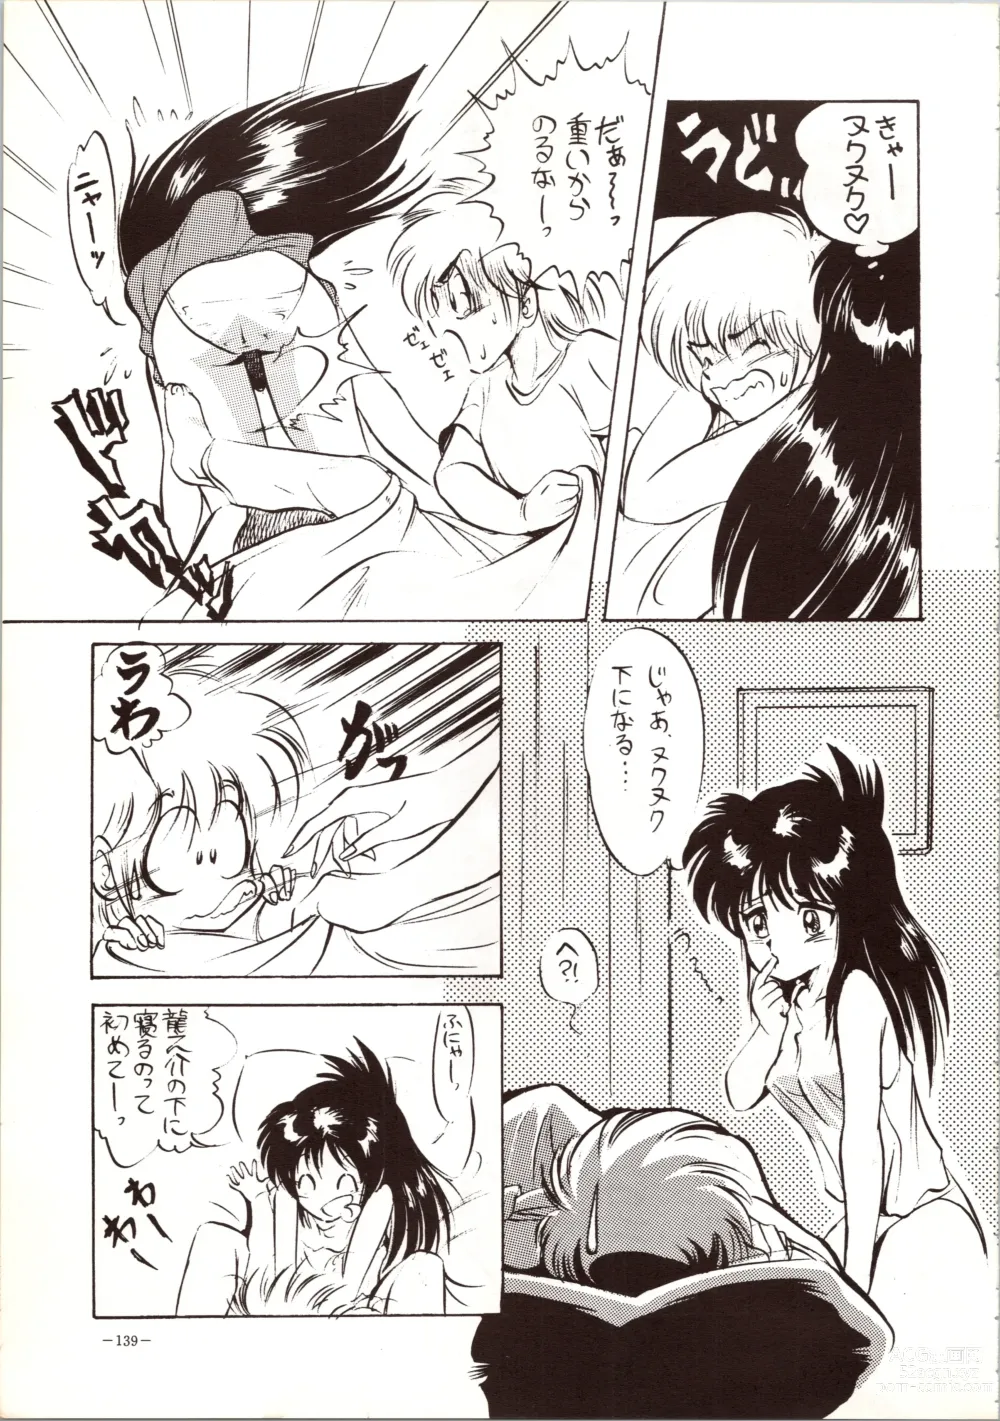 Page 139 of doujinshi MODEL 5